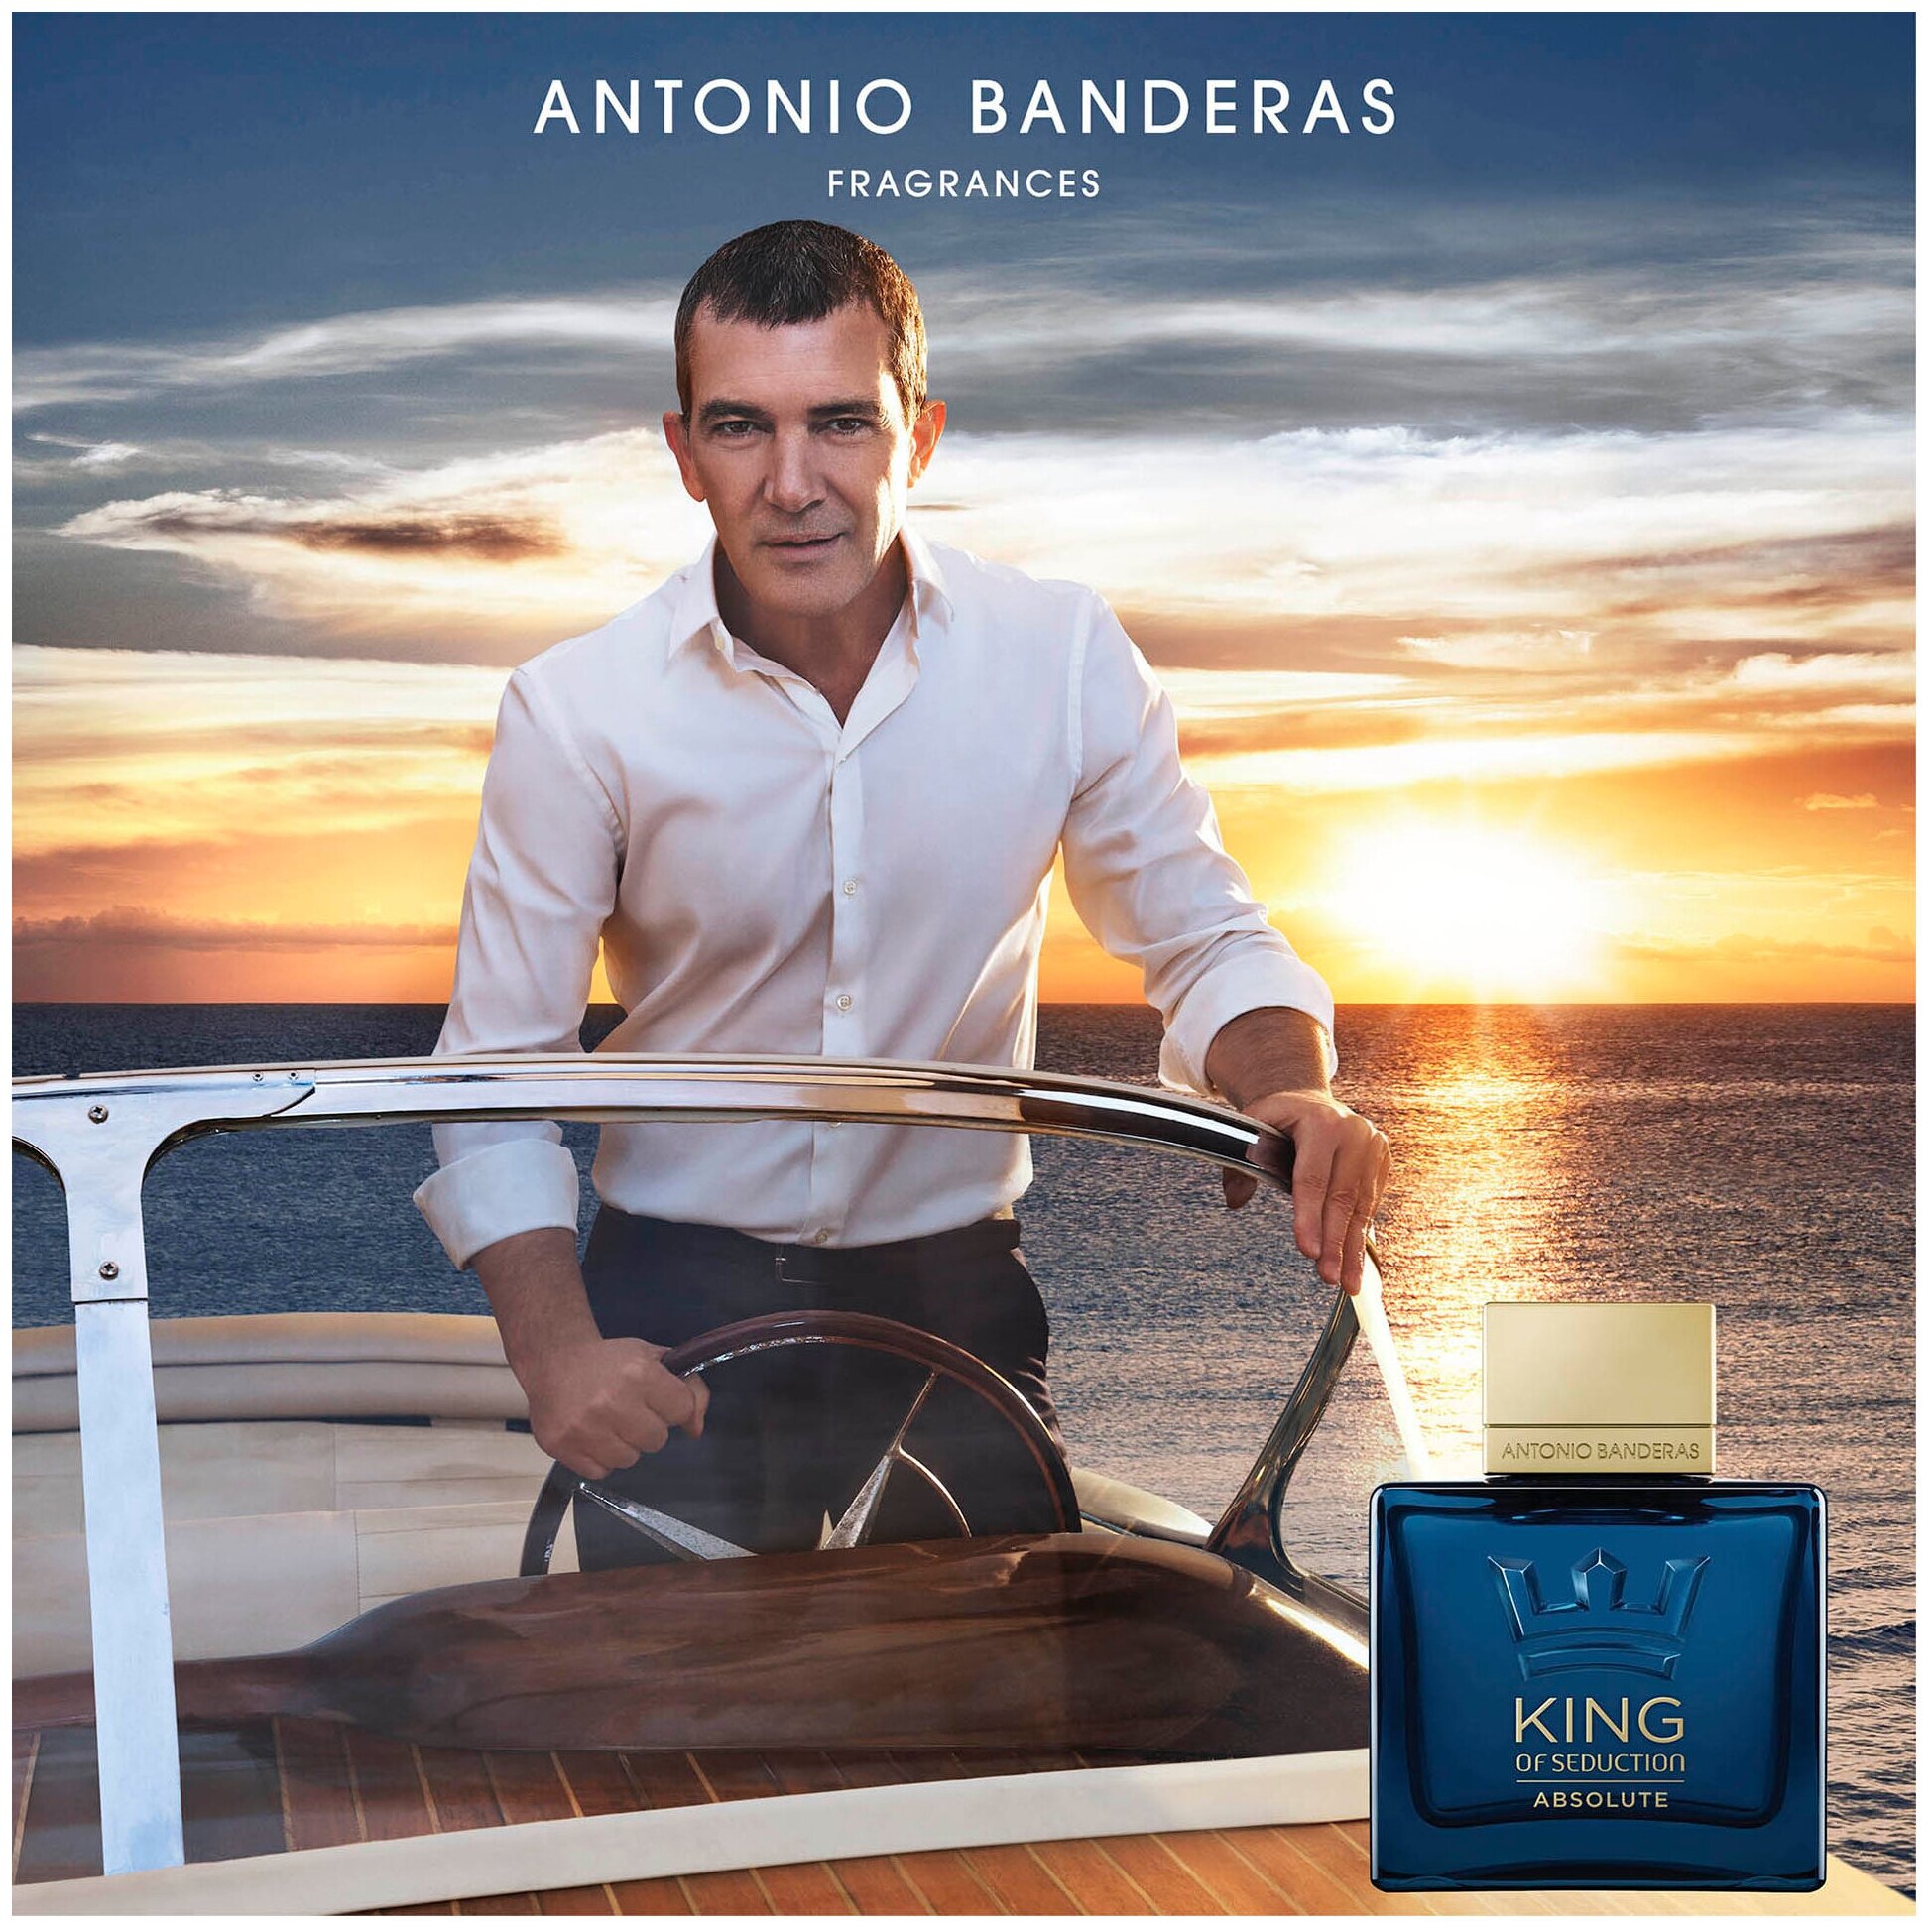 Antonio Banderas King Of Seduction Absolute Товар Туалетная вода 100 мл Antonio Puig, S.A. ES - фото №4